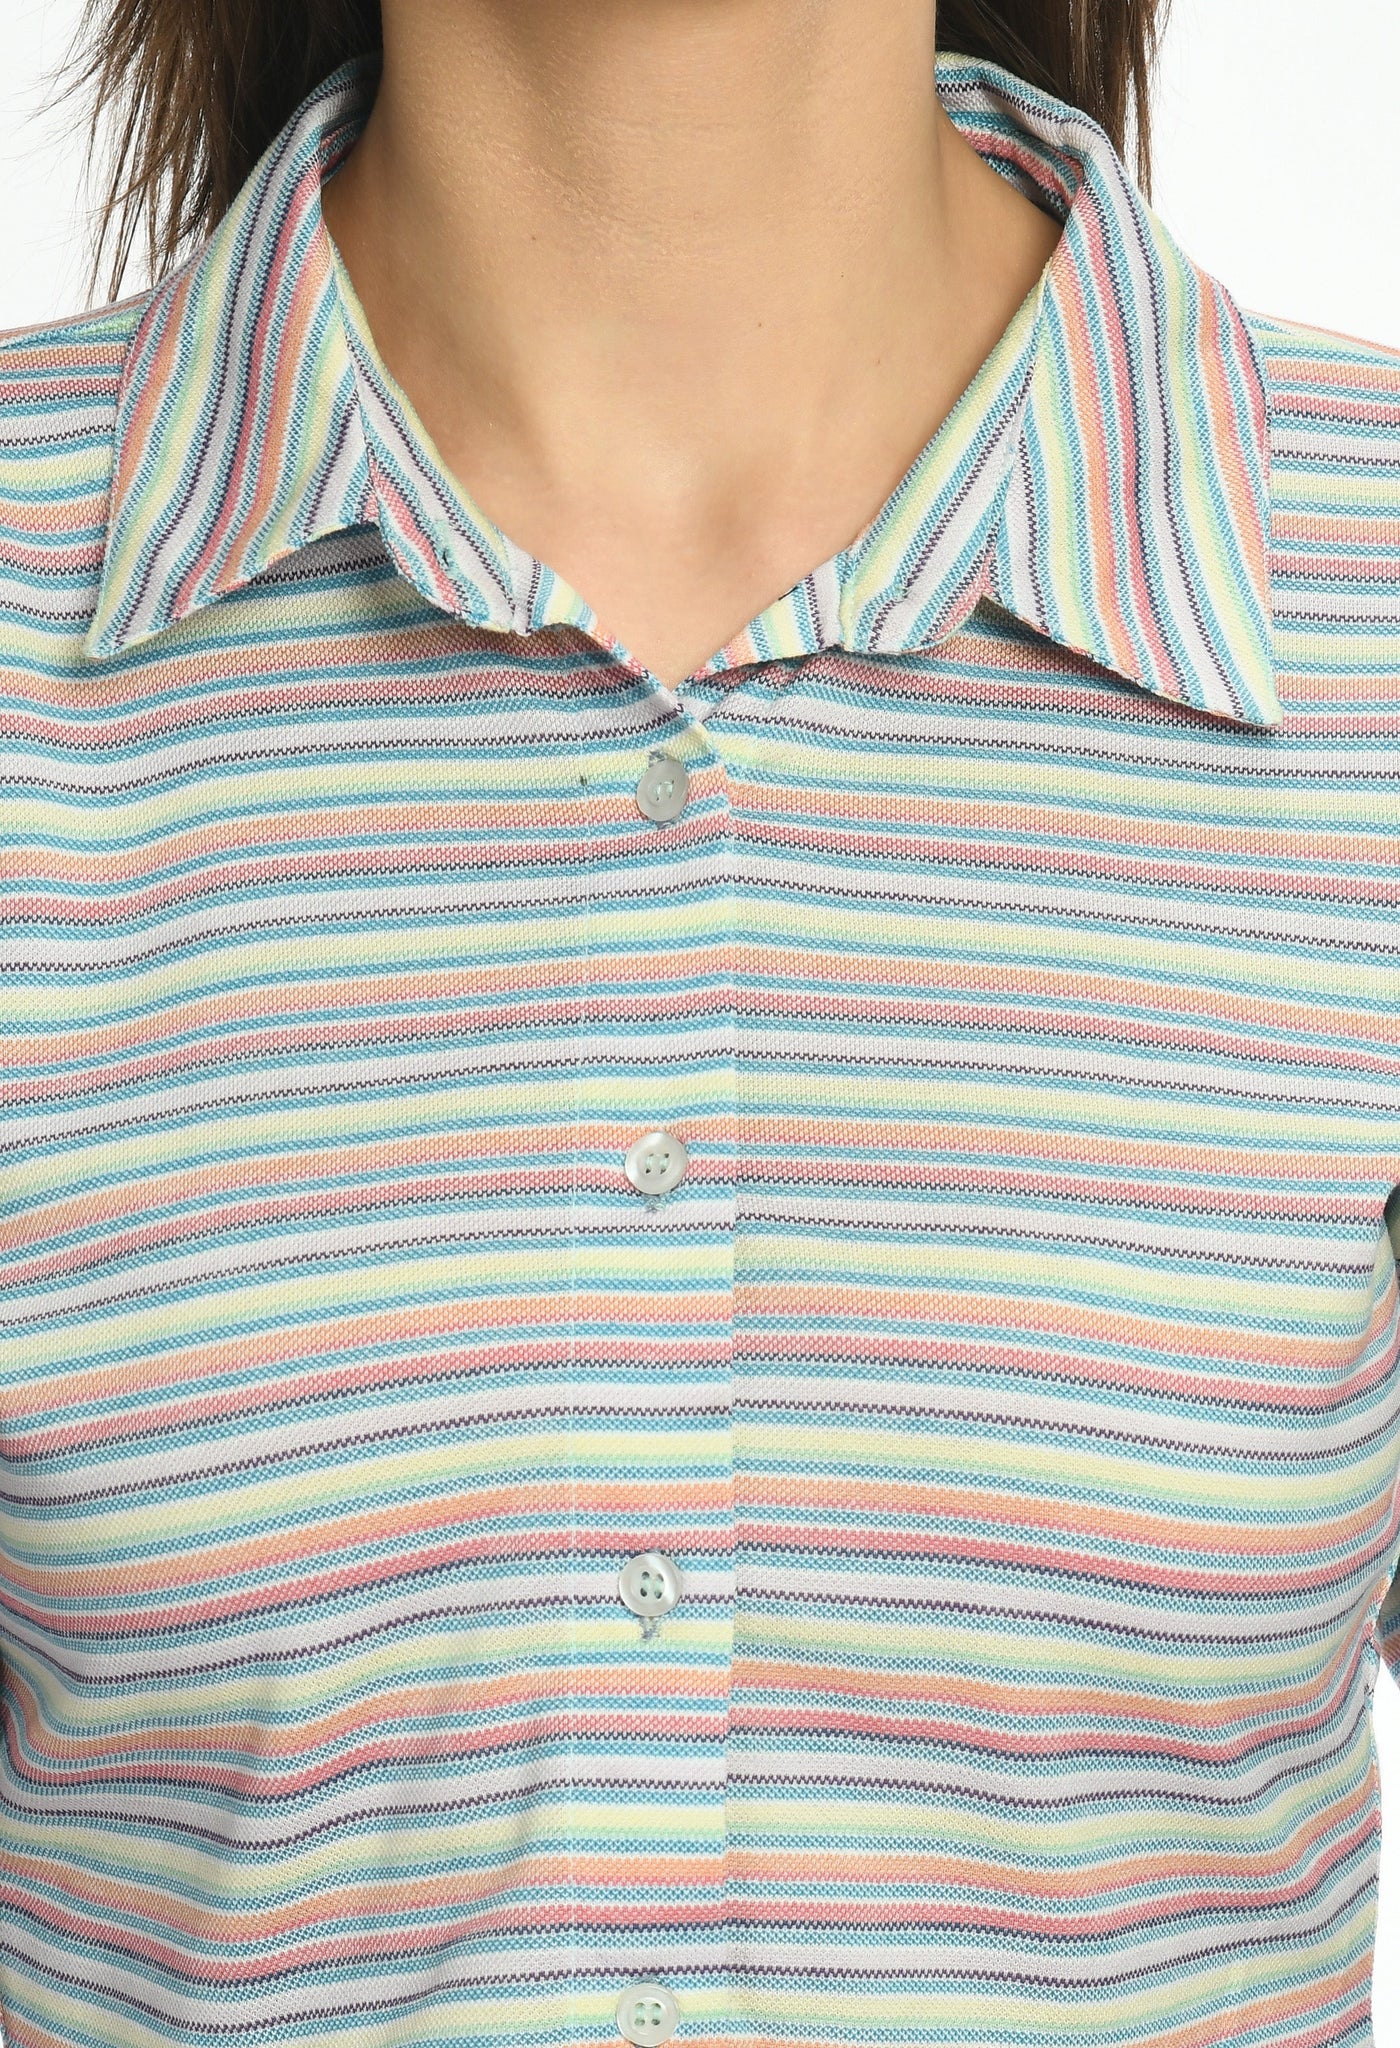 Cropped Pique Striper Shirt